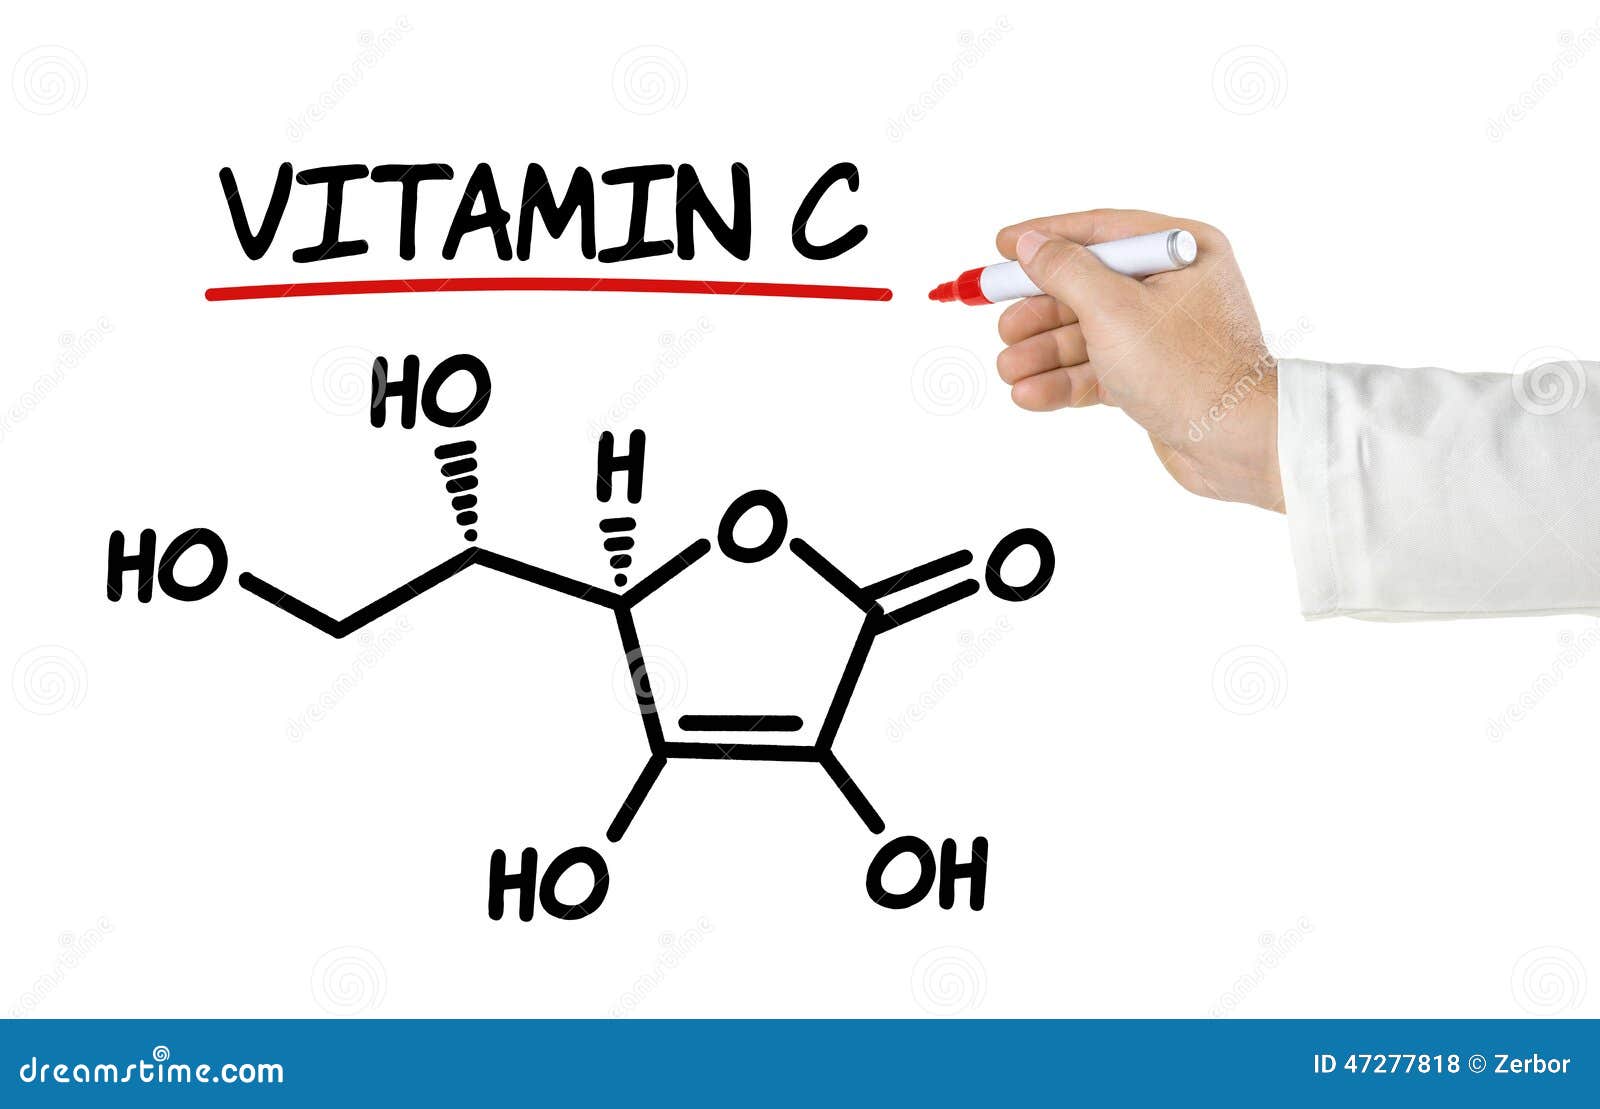 Chemical Formula Of Vitamin C Stock Illustration - Image: 47277818